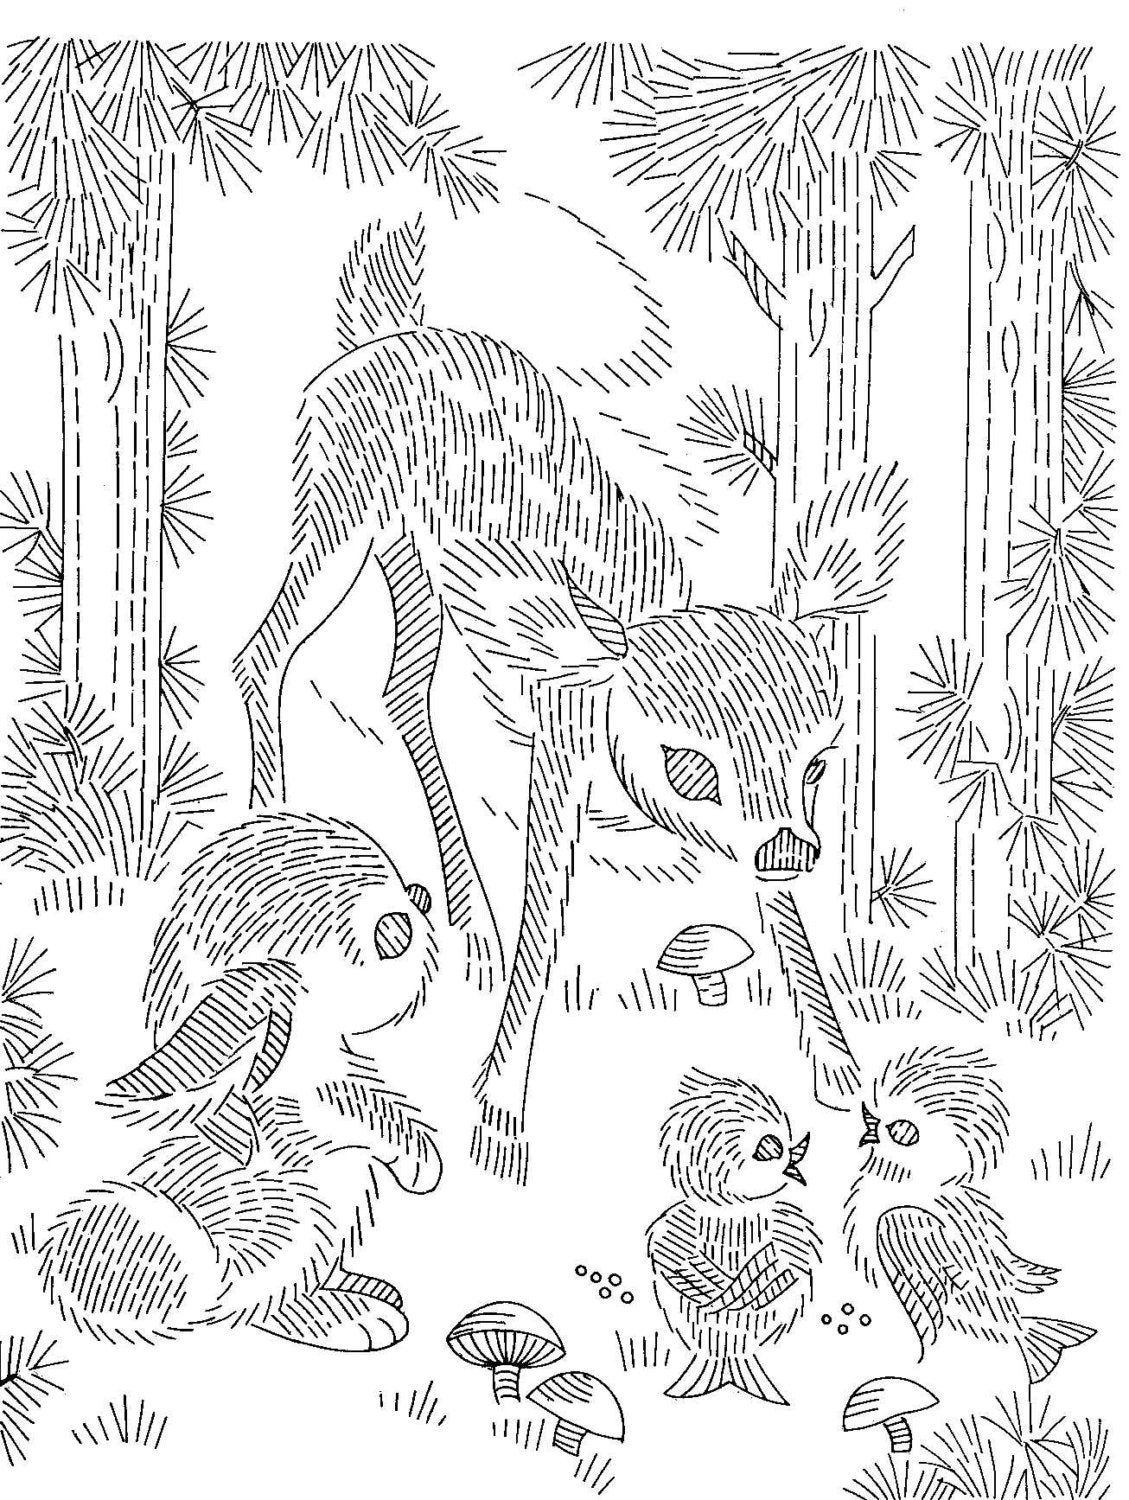 Download Vintage Hand Embroidery PATTERN PDF File 7027 Deer Bunny